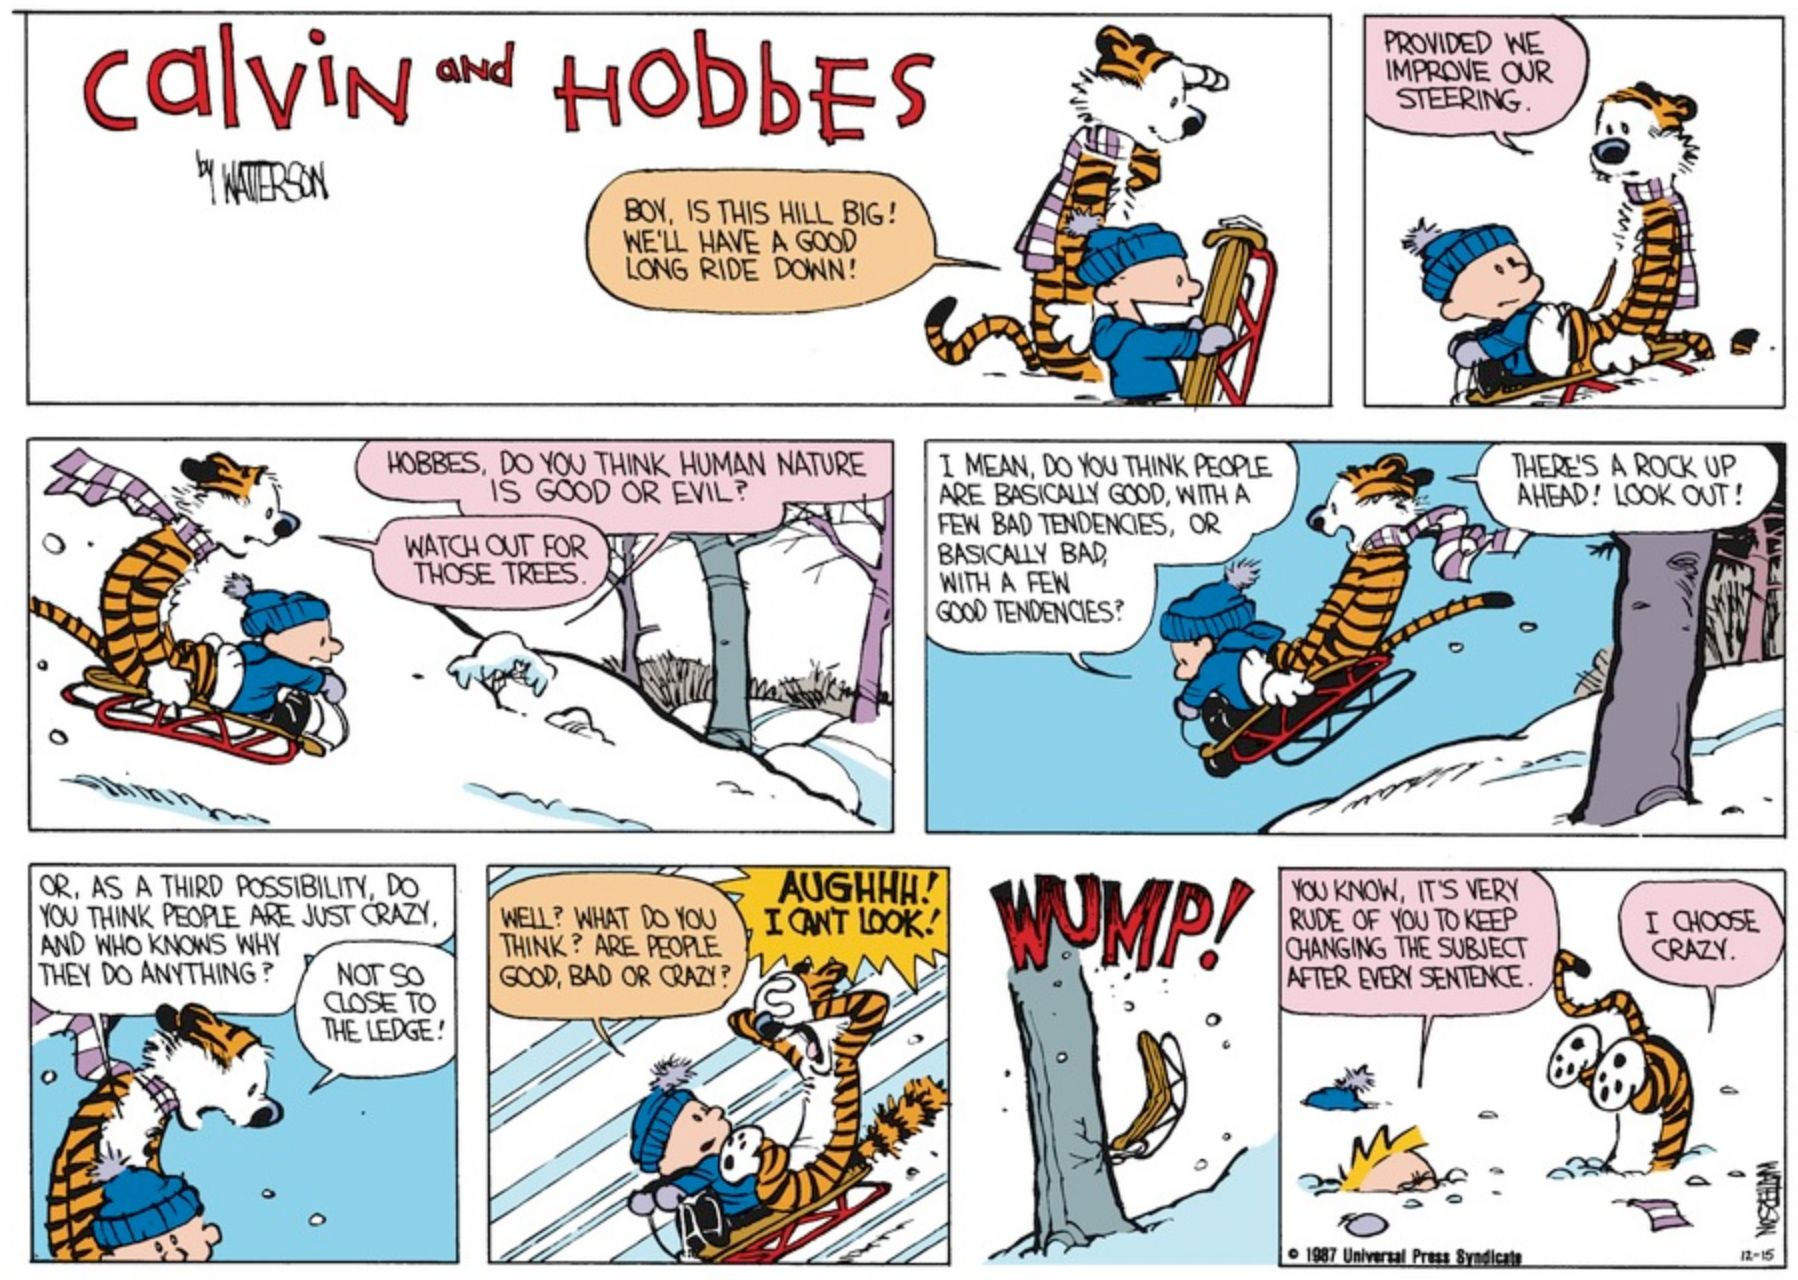 Sledding in Calvin and Hobbes